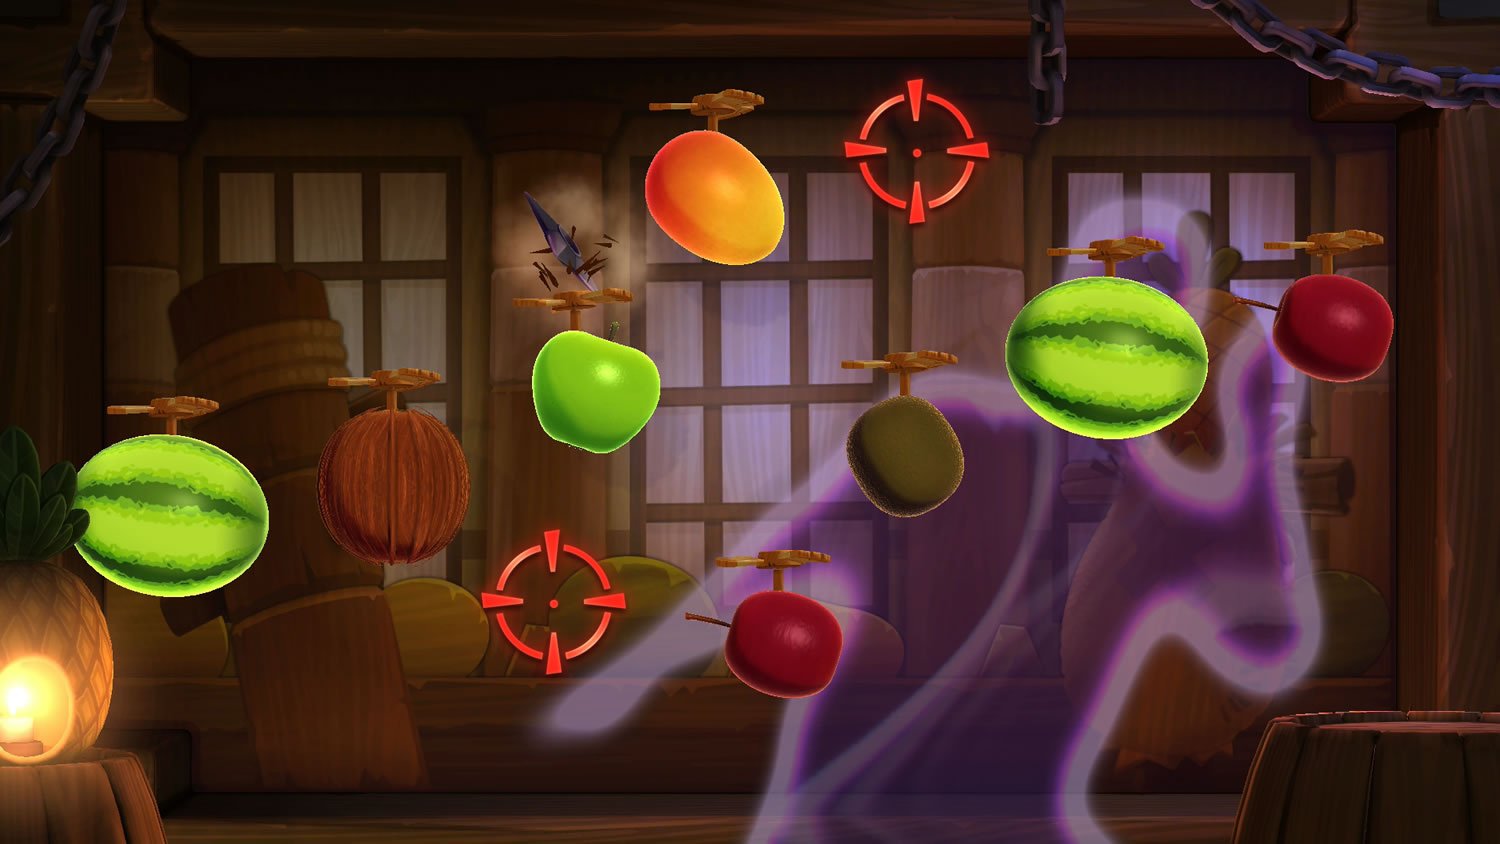 Looks like Fruit Ninja Kinect 2 is coming soon for Xbox One - Polygon